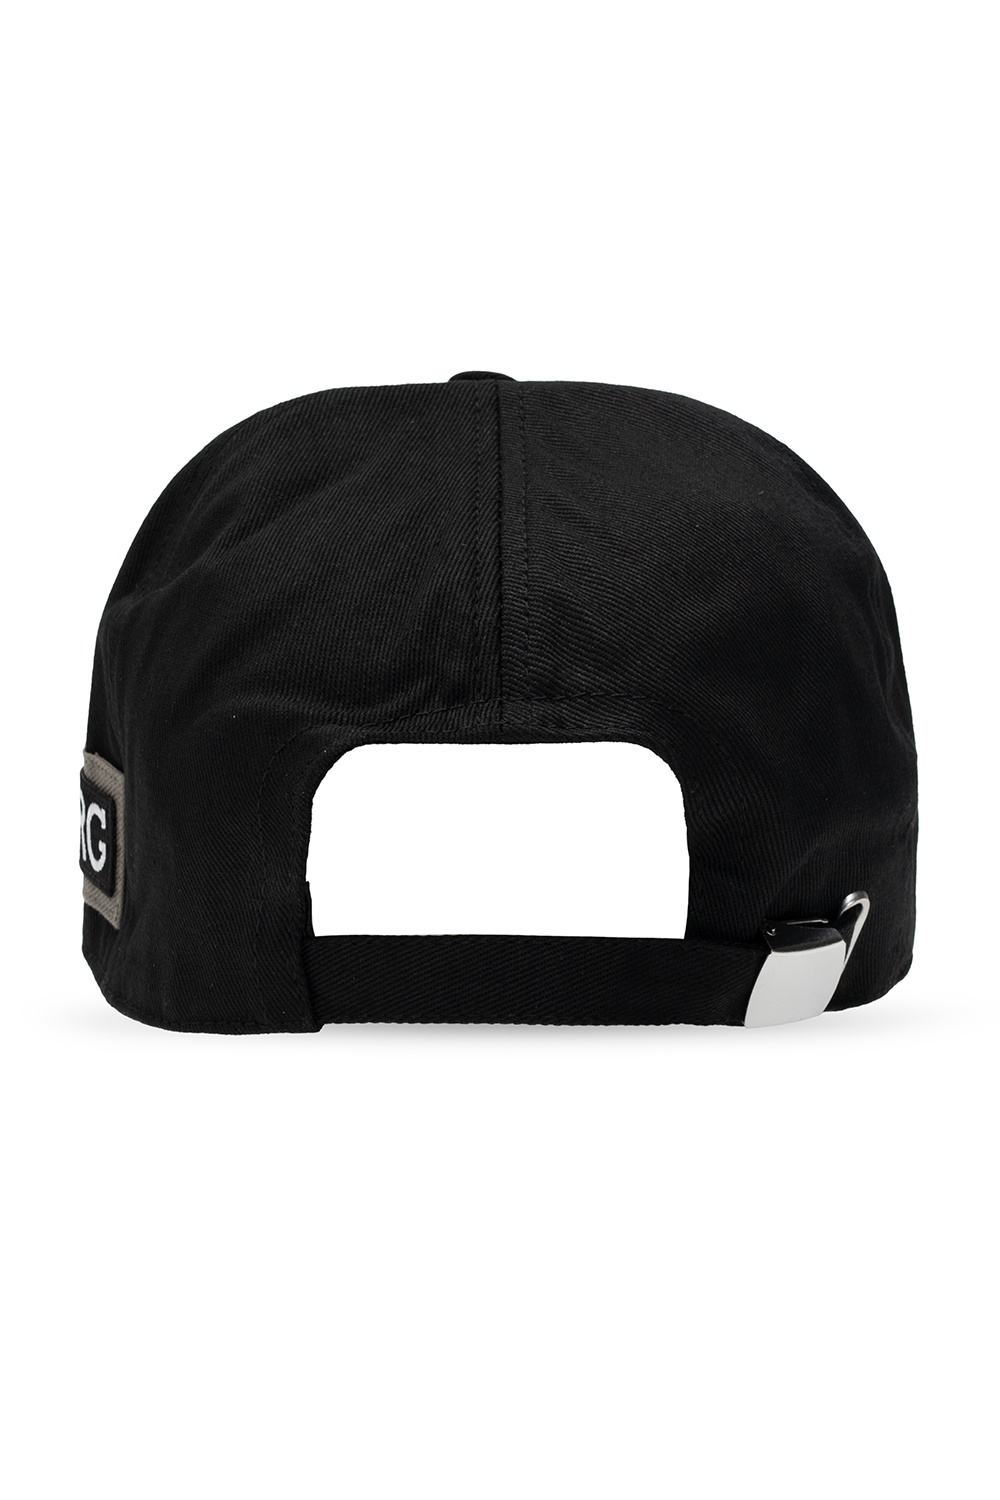 IetpShops Guatemala - men caps pens lighters robes Fragrance - Black Baseball  cap with logo Iceberg